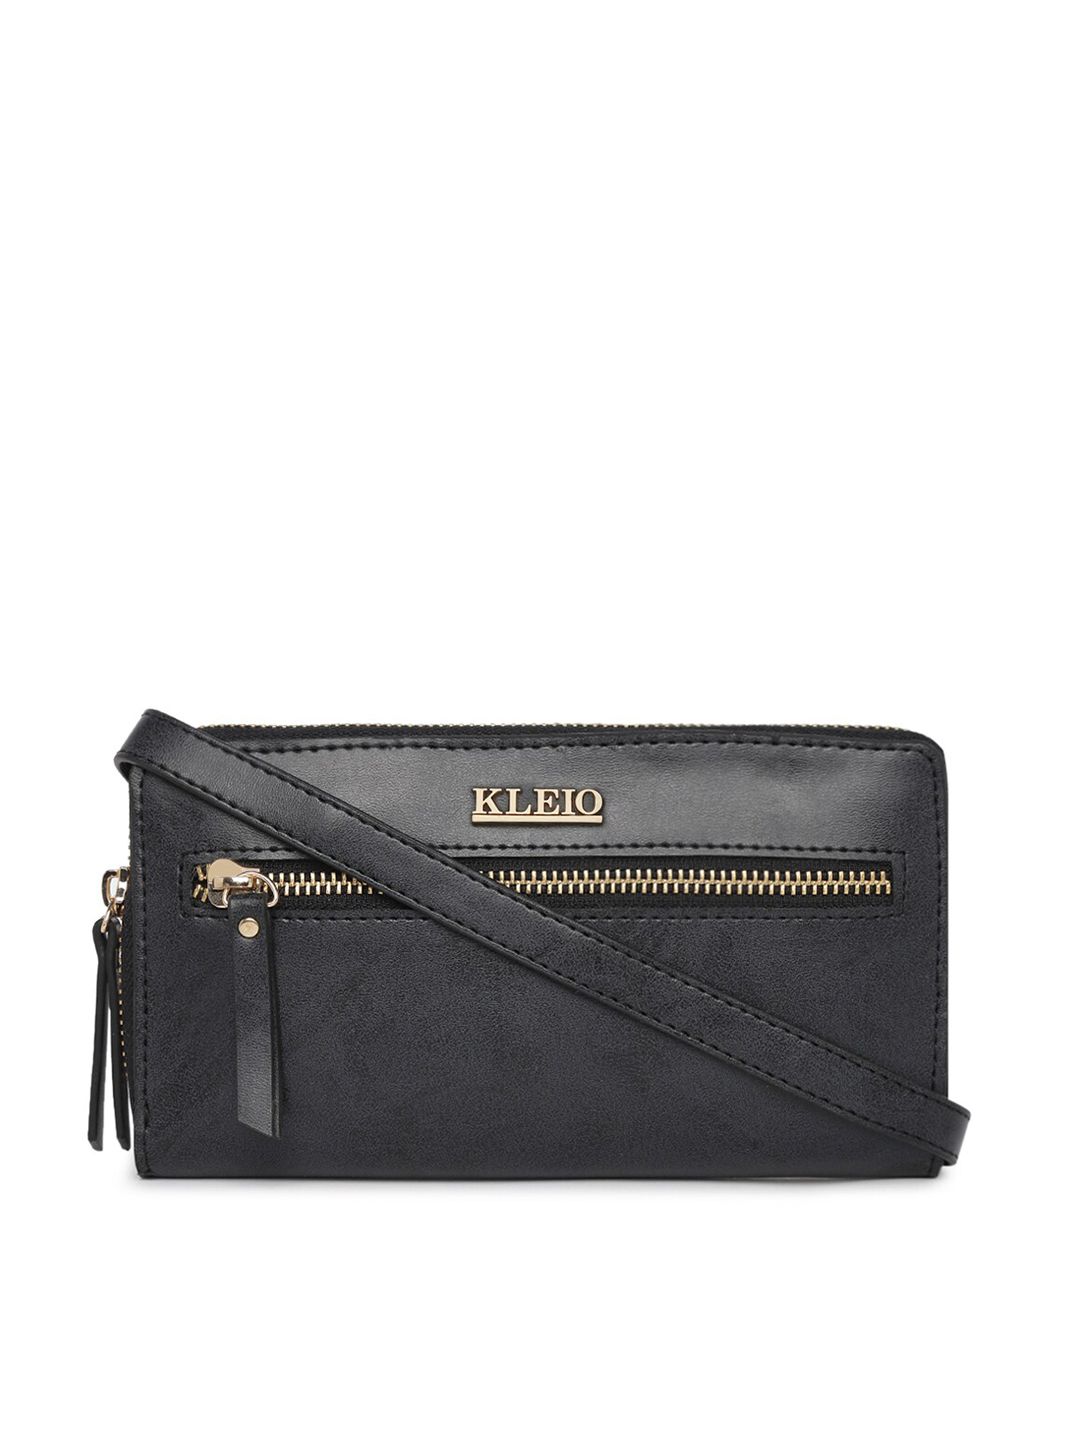 KLEIO Women Black Solid PU Zip Around Wallet with Sling Strap Price in India